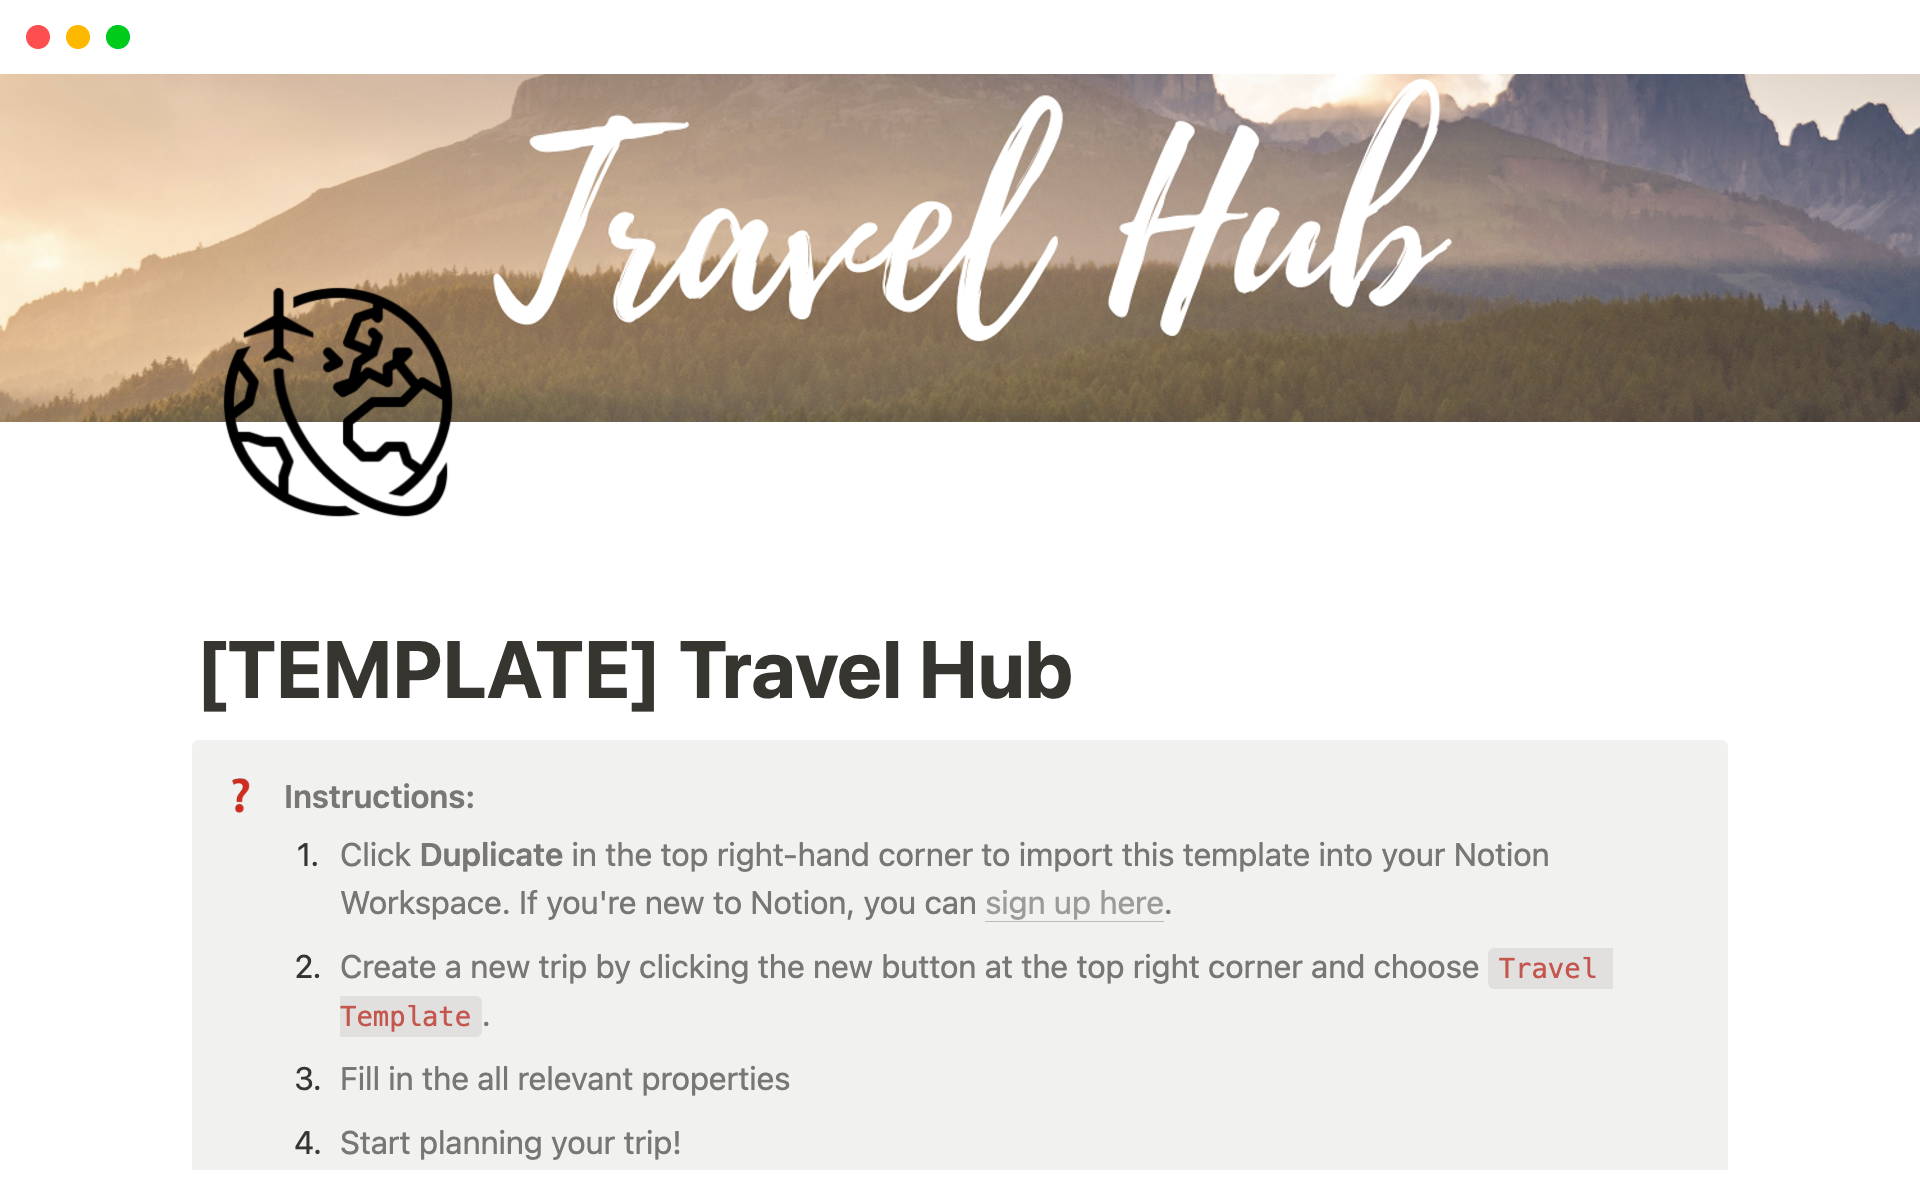 Travel Hub | Your All-In-One Travel Planner님의 템플릿 미리보기